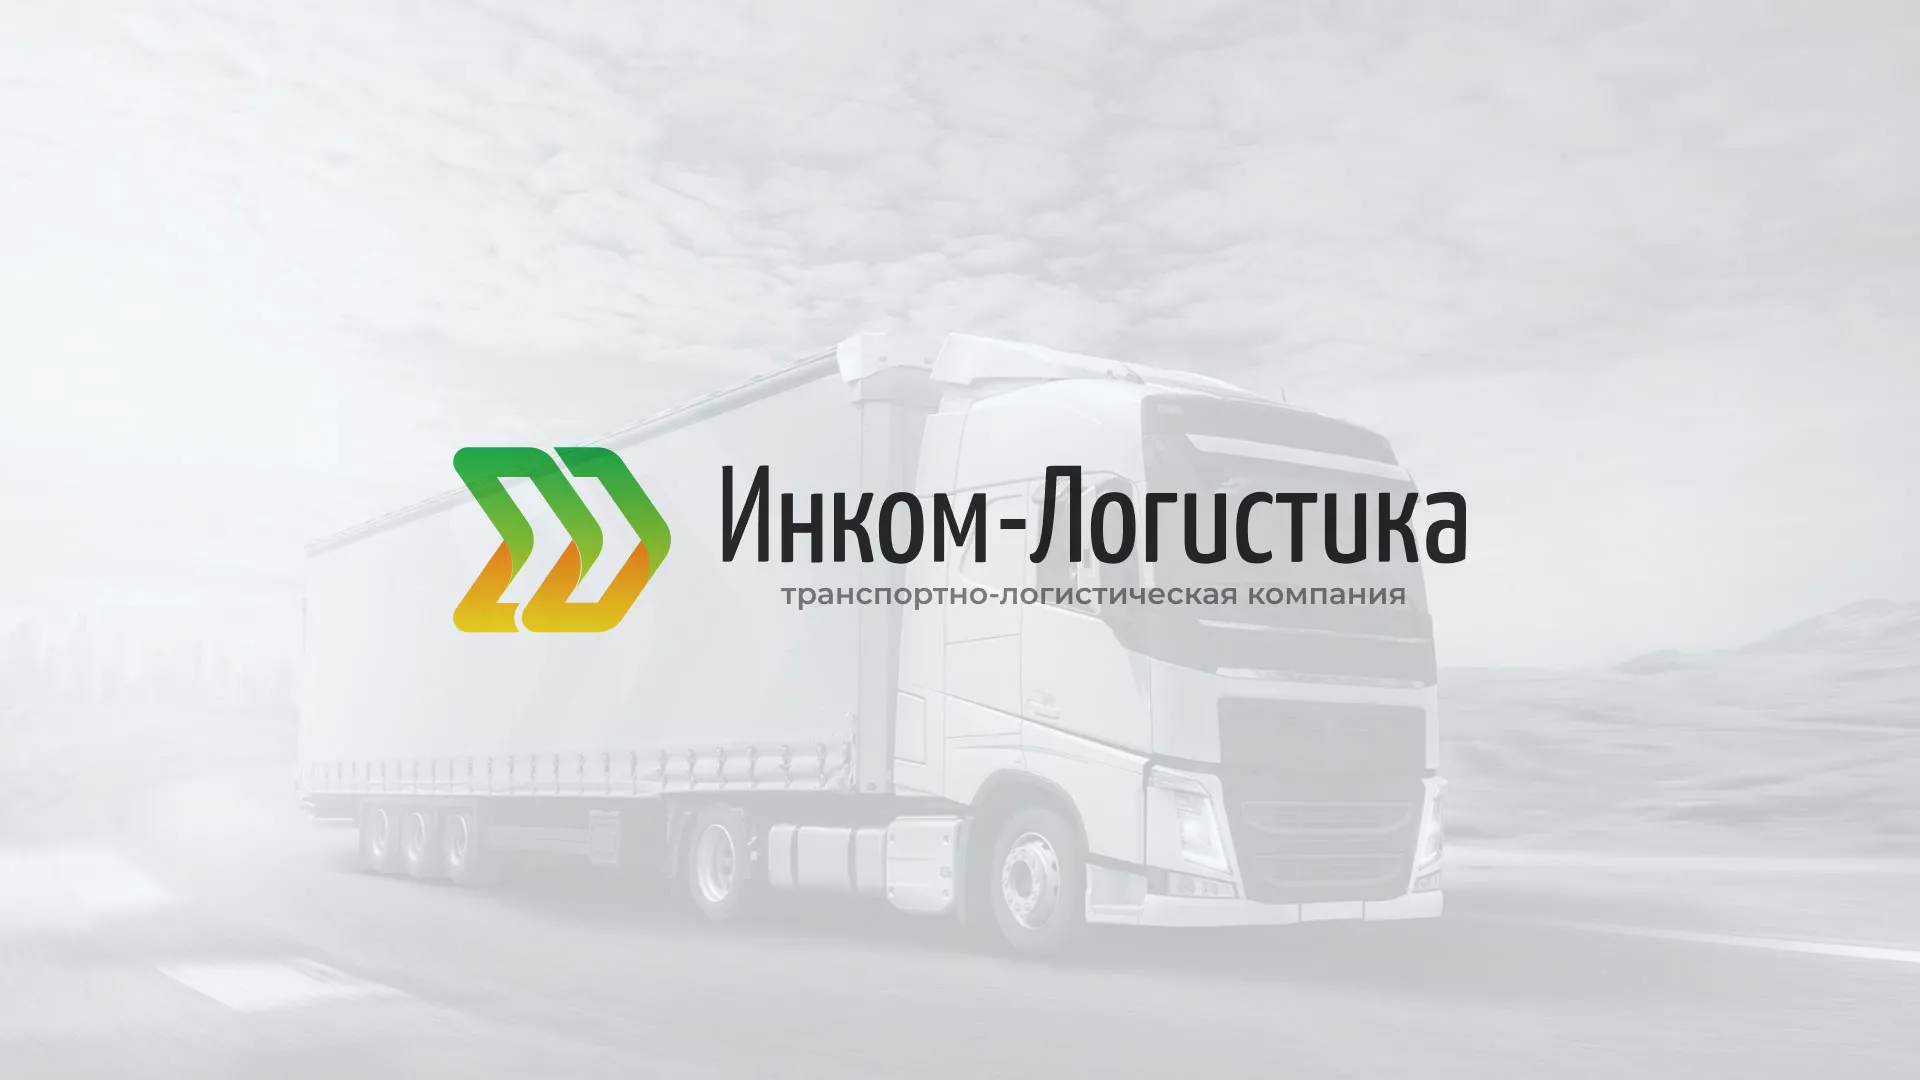 Разработка логотипа и сайта компании «Инком-Логистика» в Волгограде